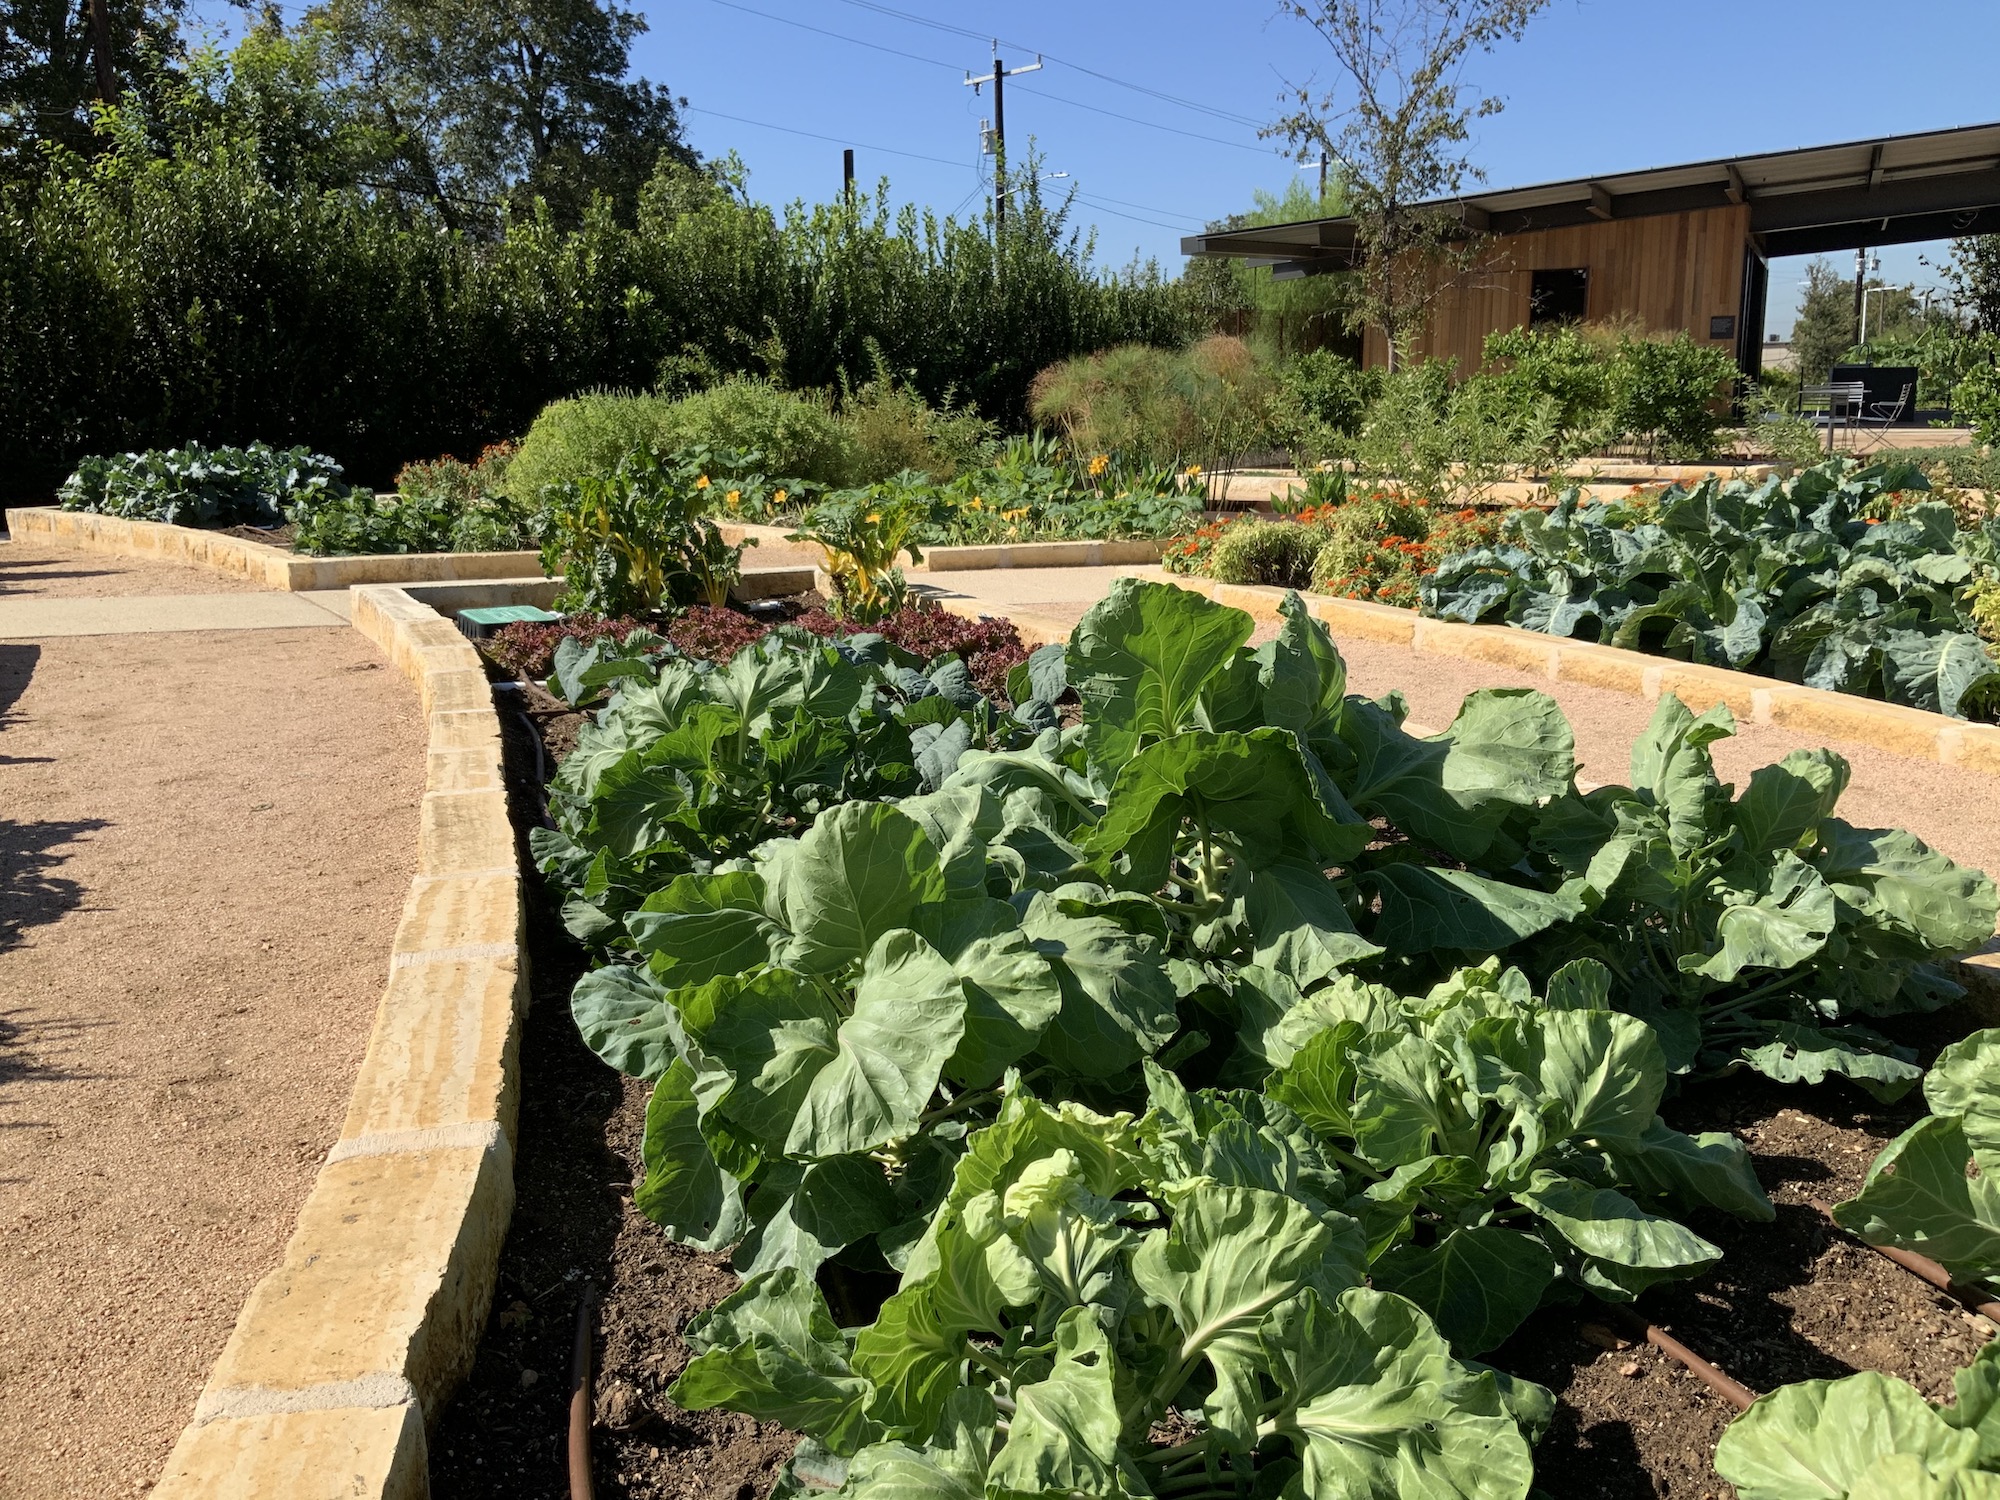 The Zachry Foundation Culinary Garden